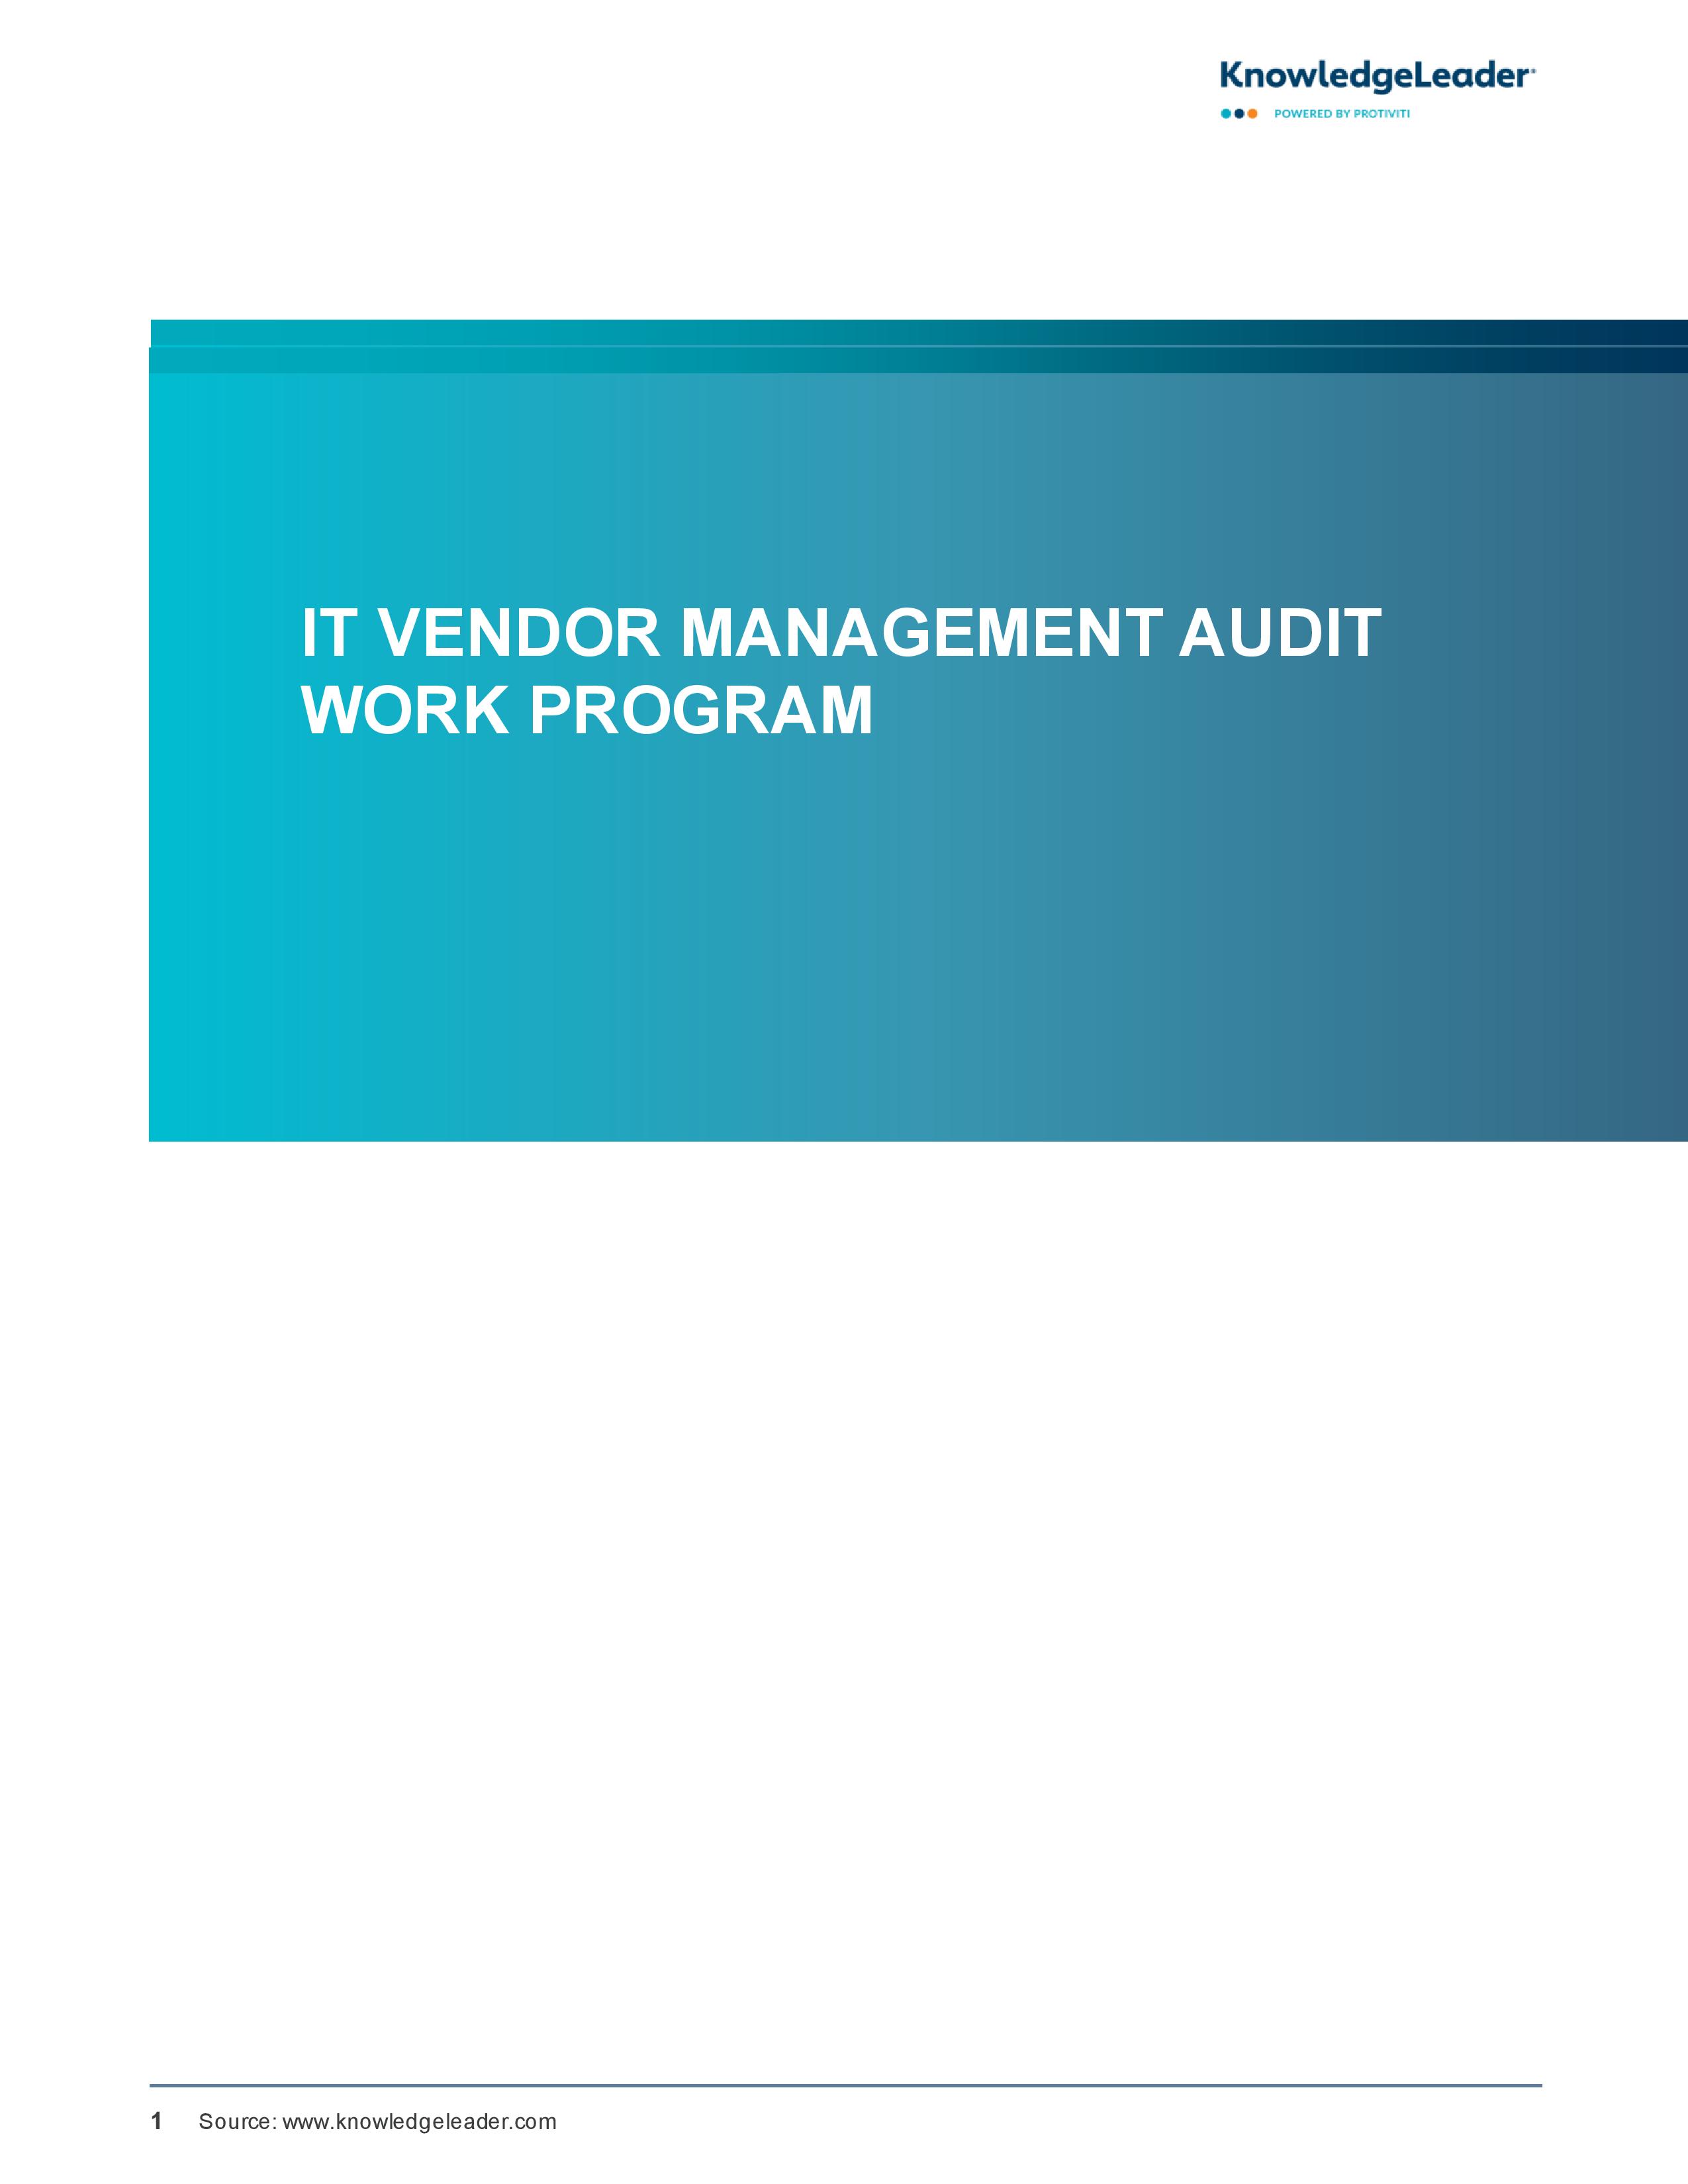 Screenshot of the first page of IT Vendor Management Audit Work Program